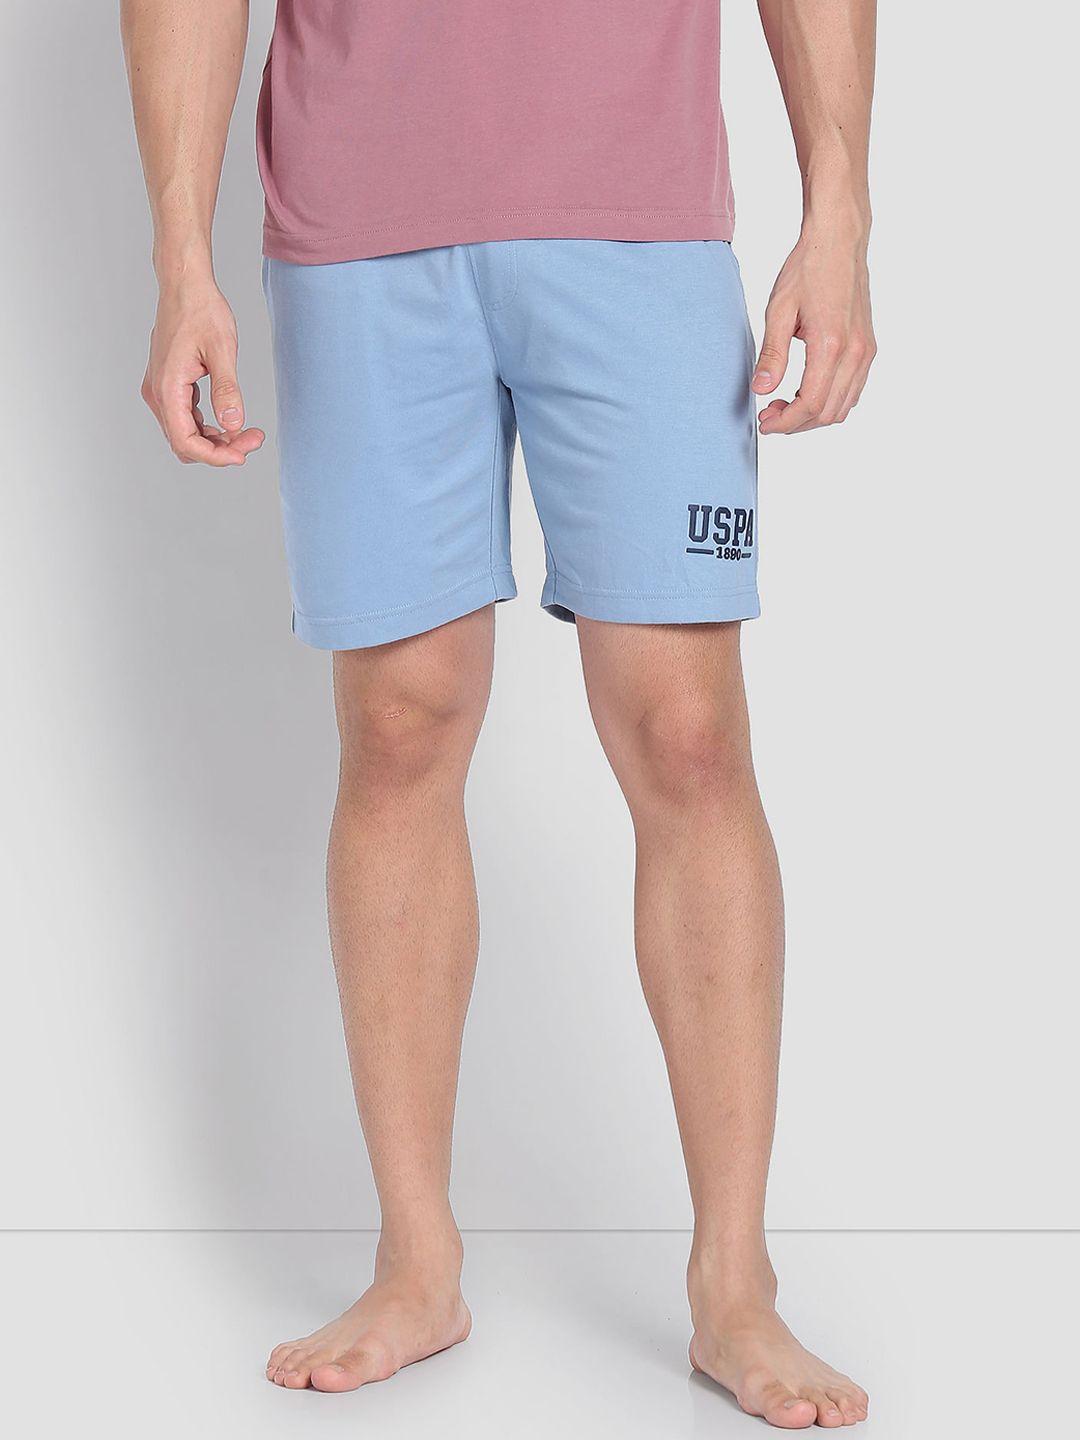 u.s. polo assn. men mid rise cotton regular shorts